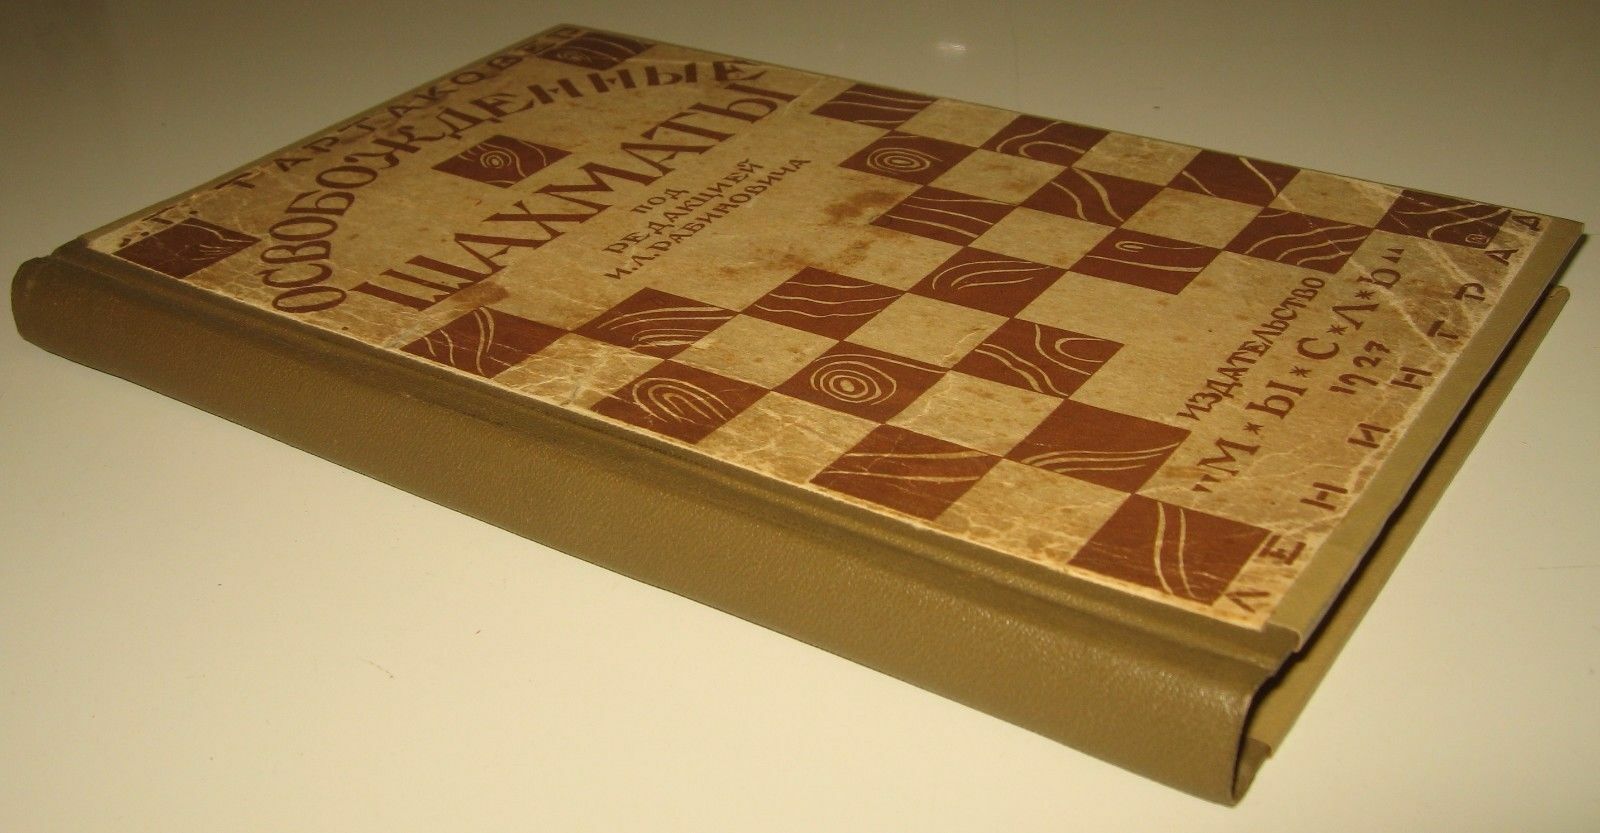 10890.Antique Russian Chess Book: S. Tartakower. Liberated chess. 1927